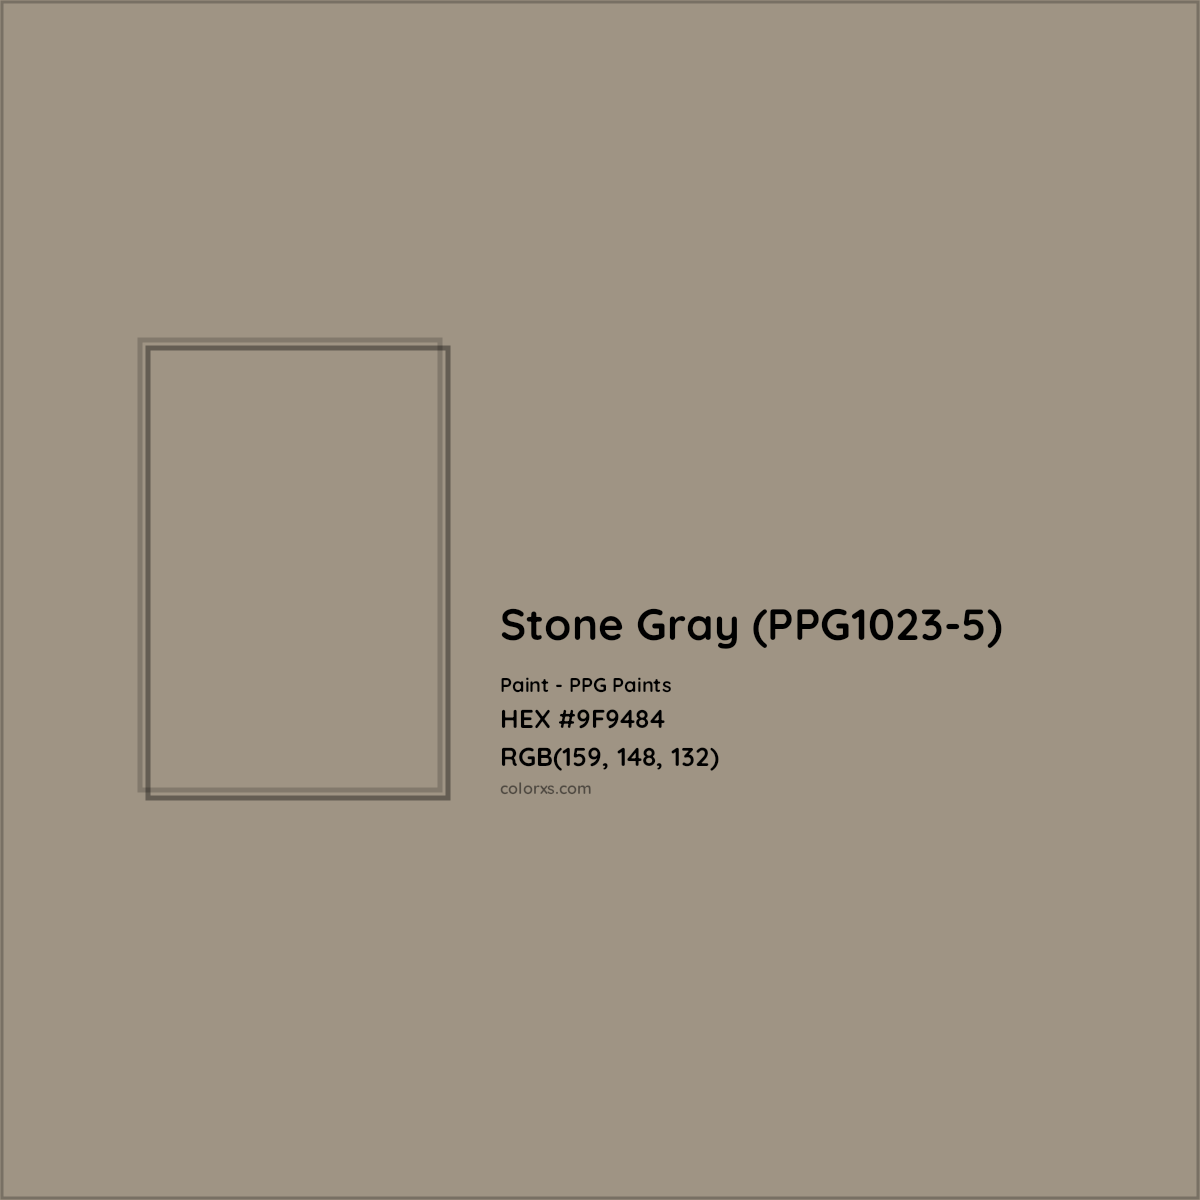 PPG Paints Stone Gray (PPG1023-5) Paint color codes, similar paints and  colors 